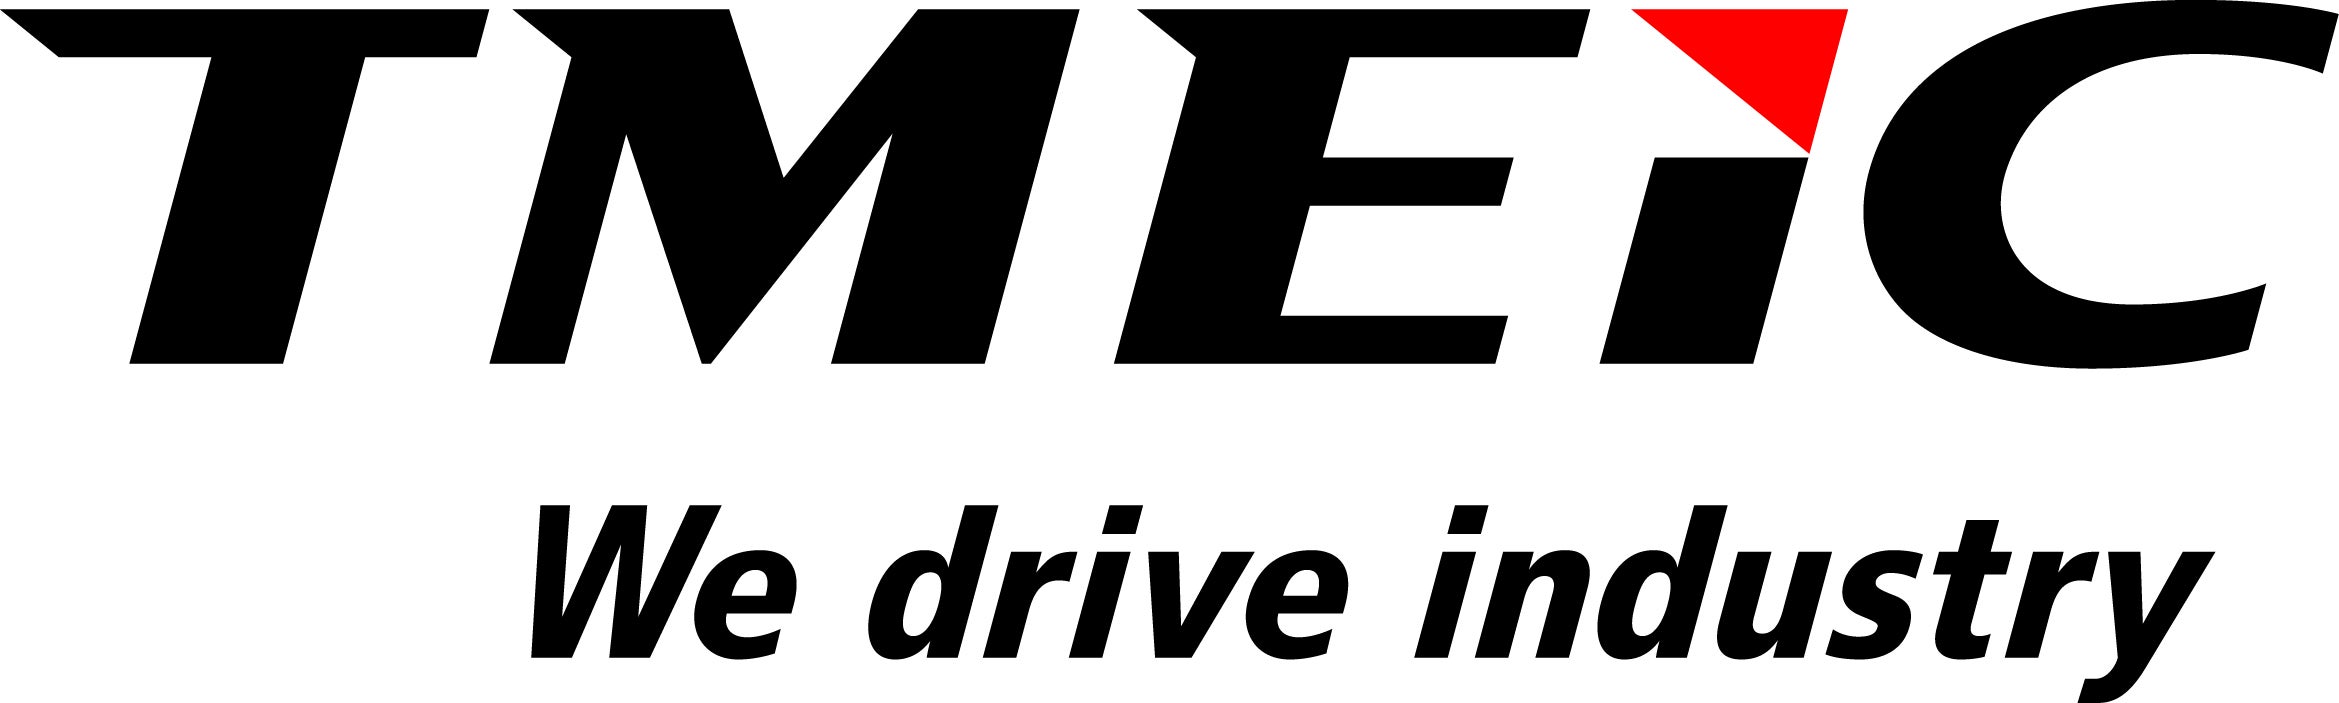 TMEIC logo